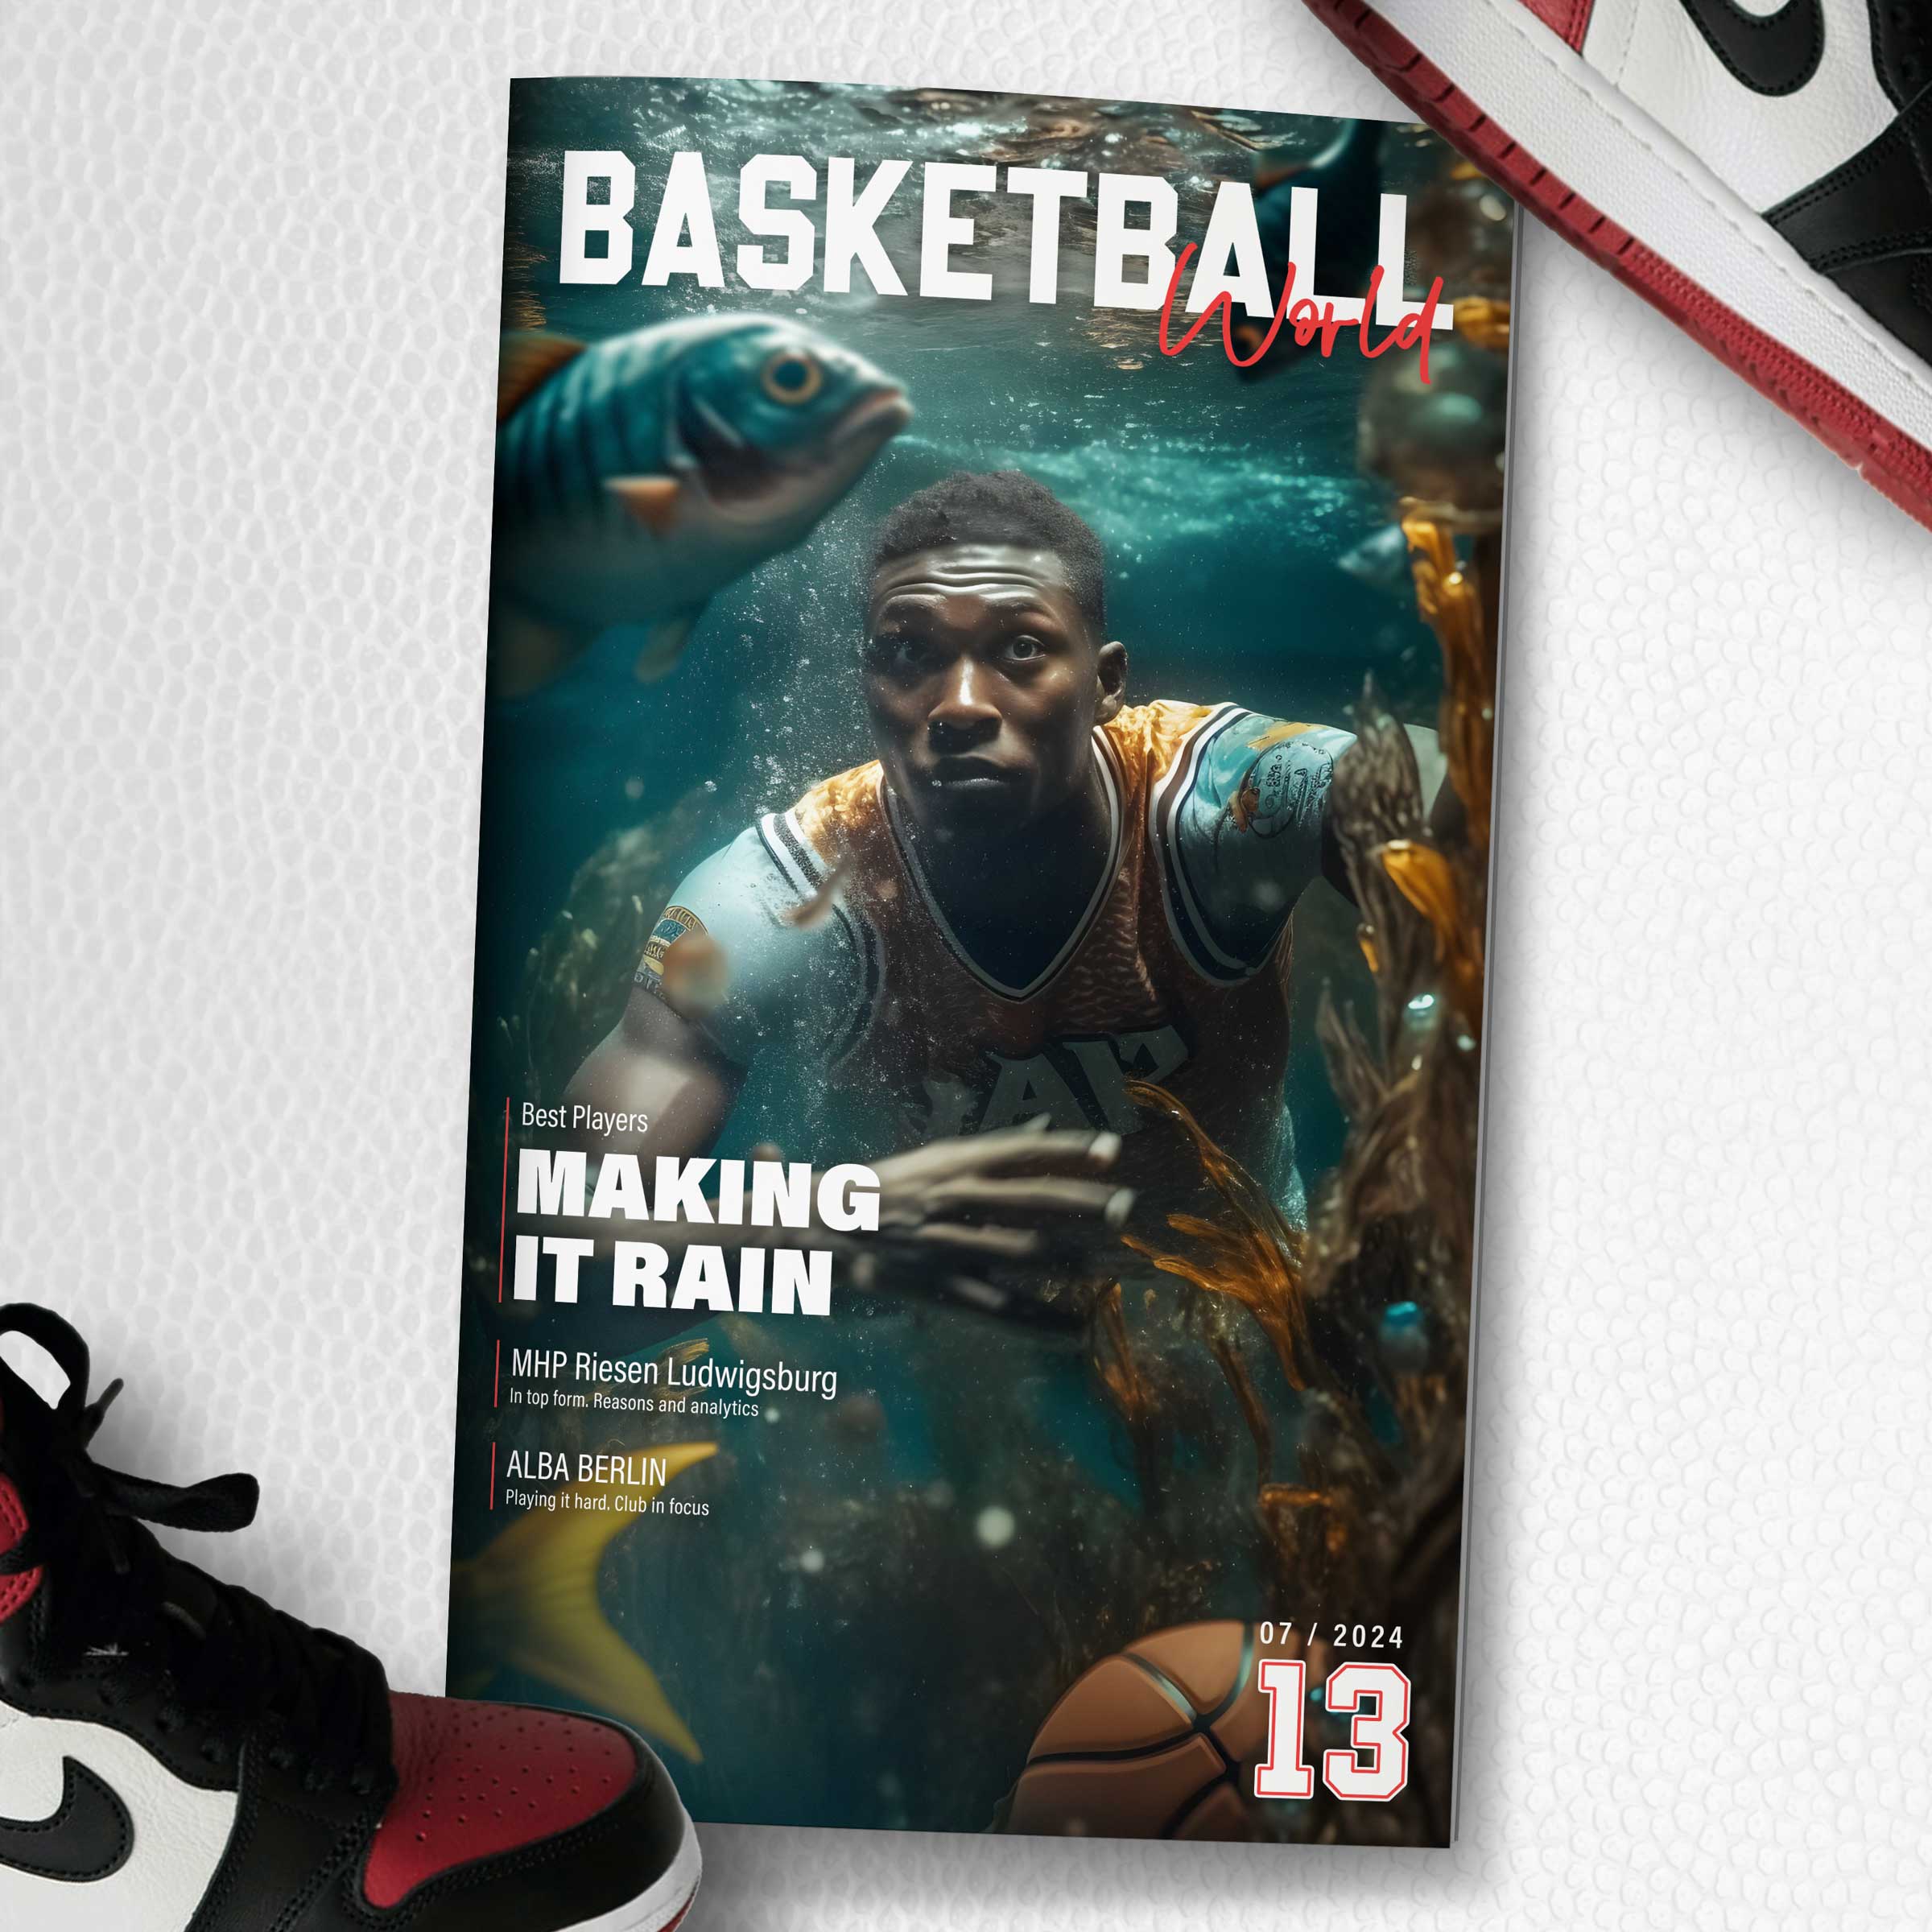 Cover Art for a basketball magazine by the freelance art director, UX Designer, UI Designer and Illustrator Christoph Gey from Leipzig